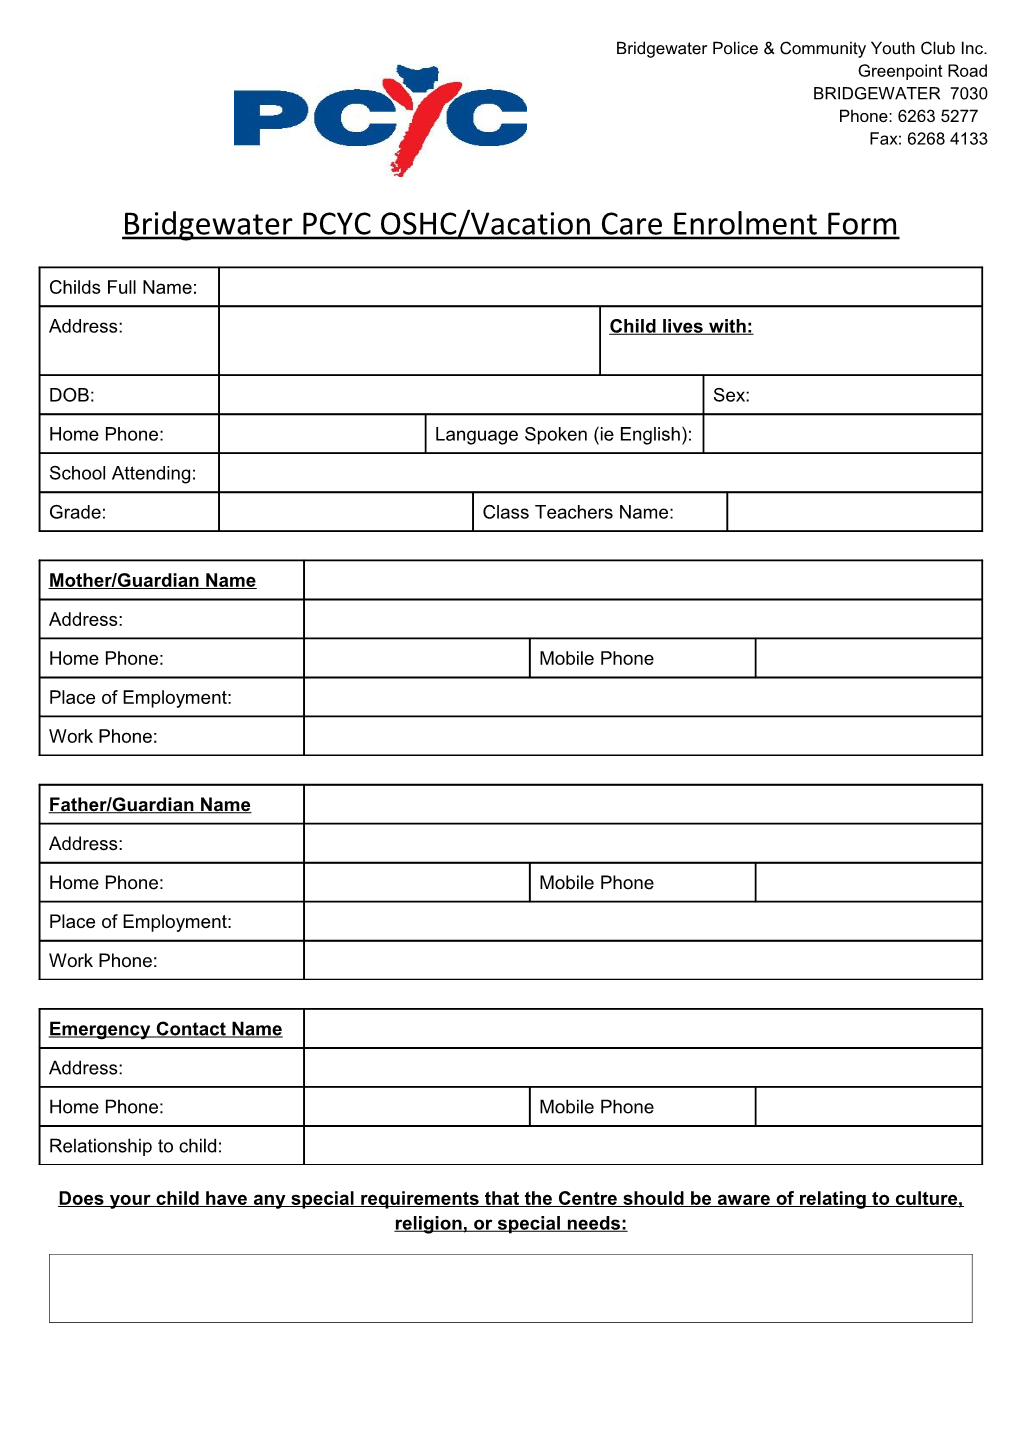 Bridgewater PCYCOSHC/Vacation Care Enrolment Form